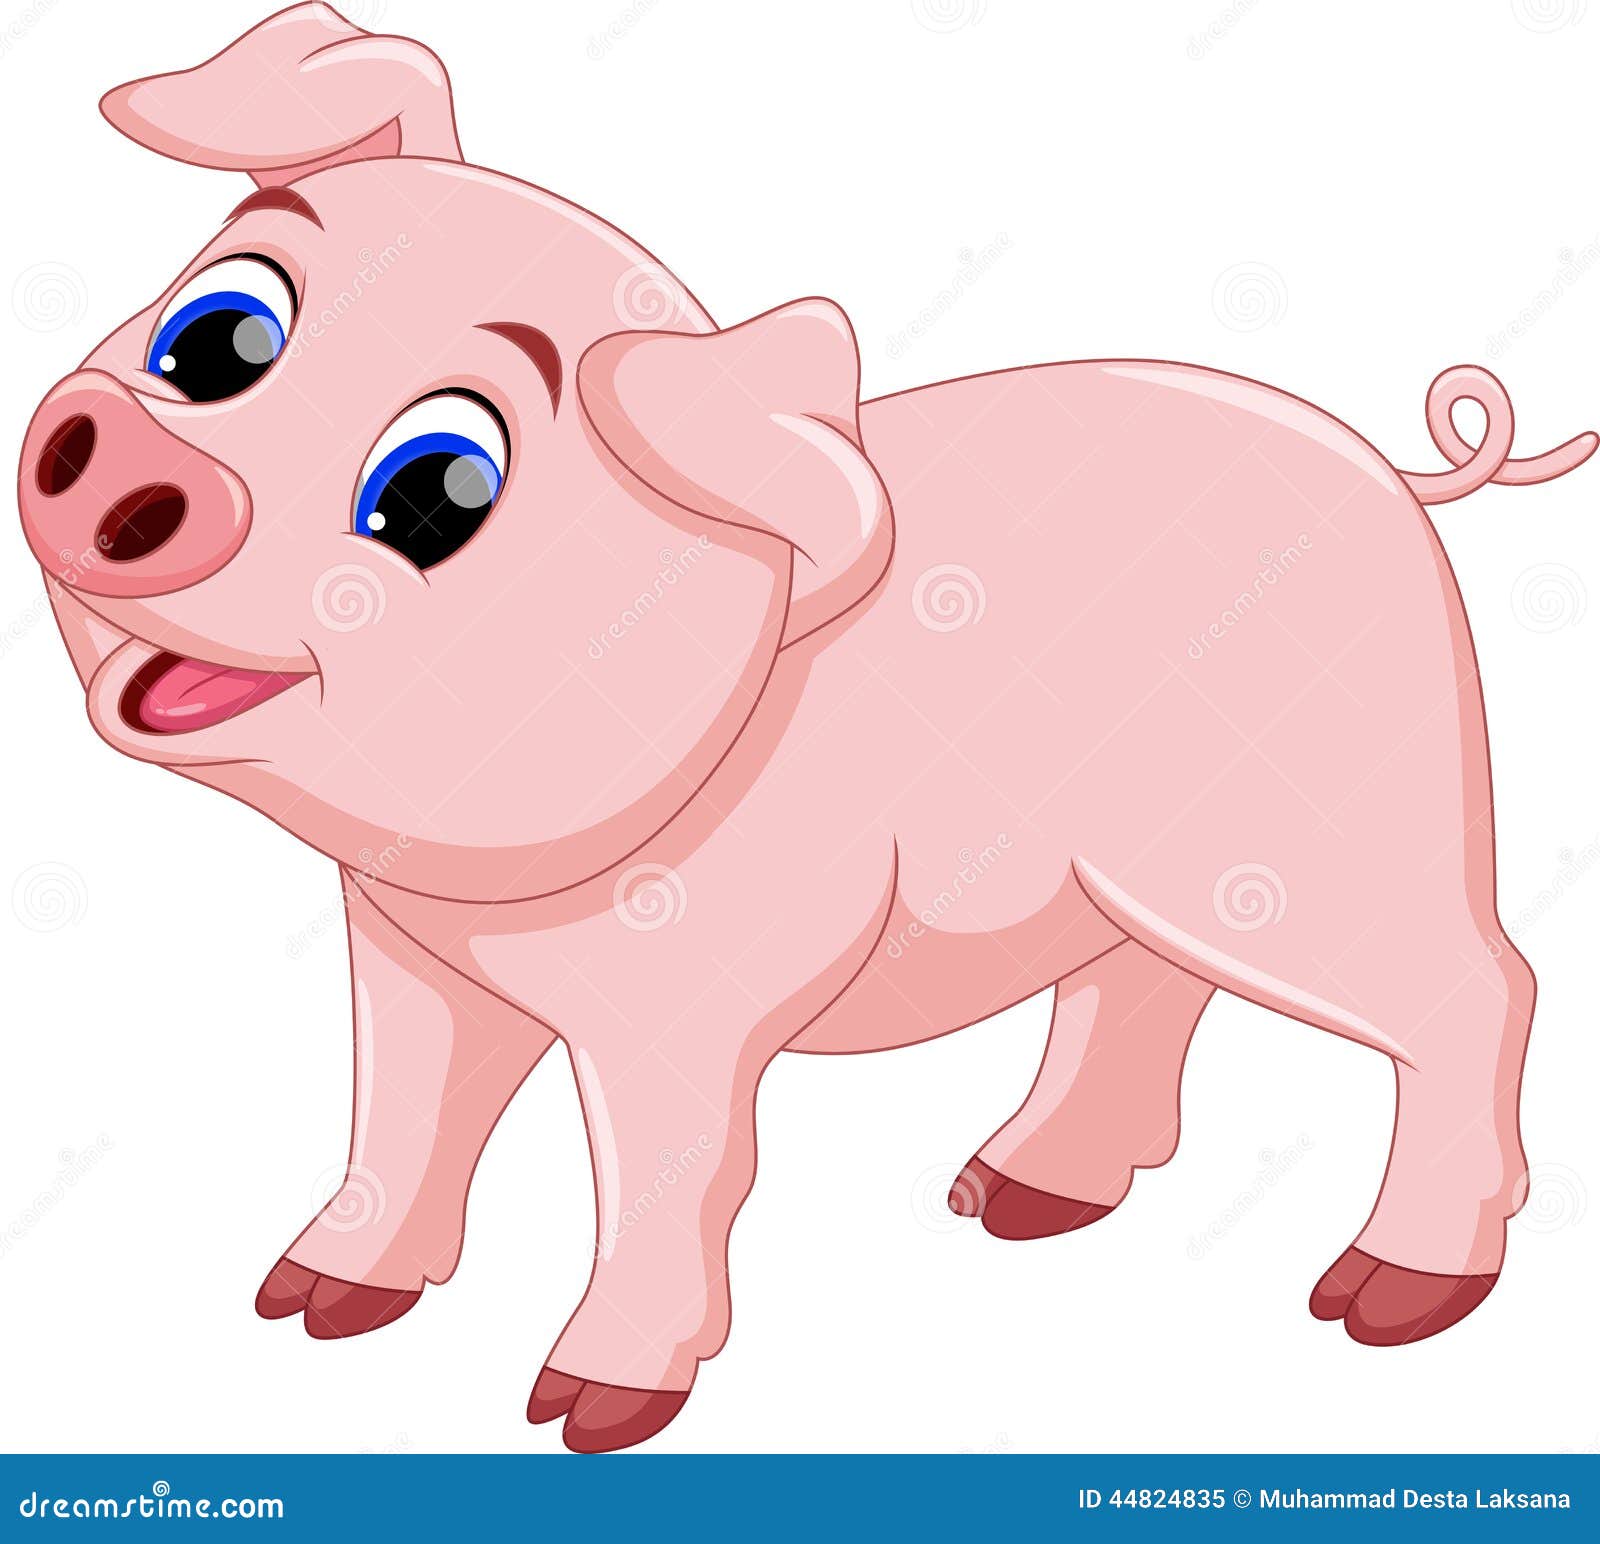 Cute Chef Pig Cartoon Stock Illustration - Image: 44824835